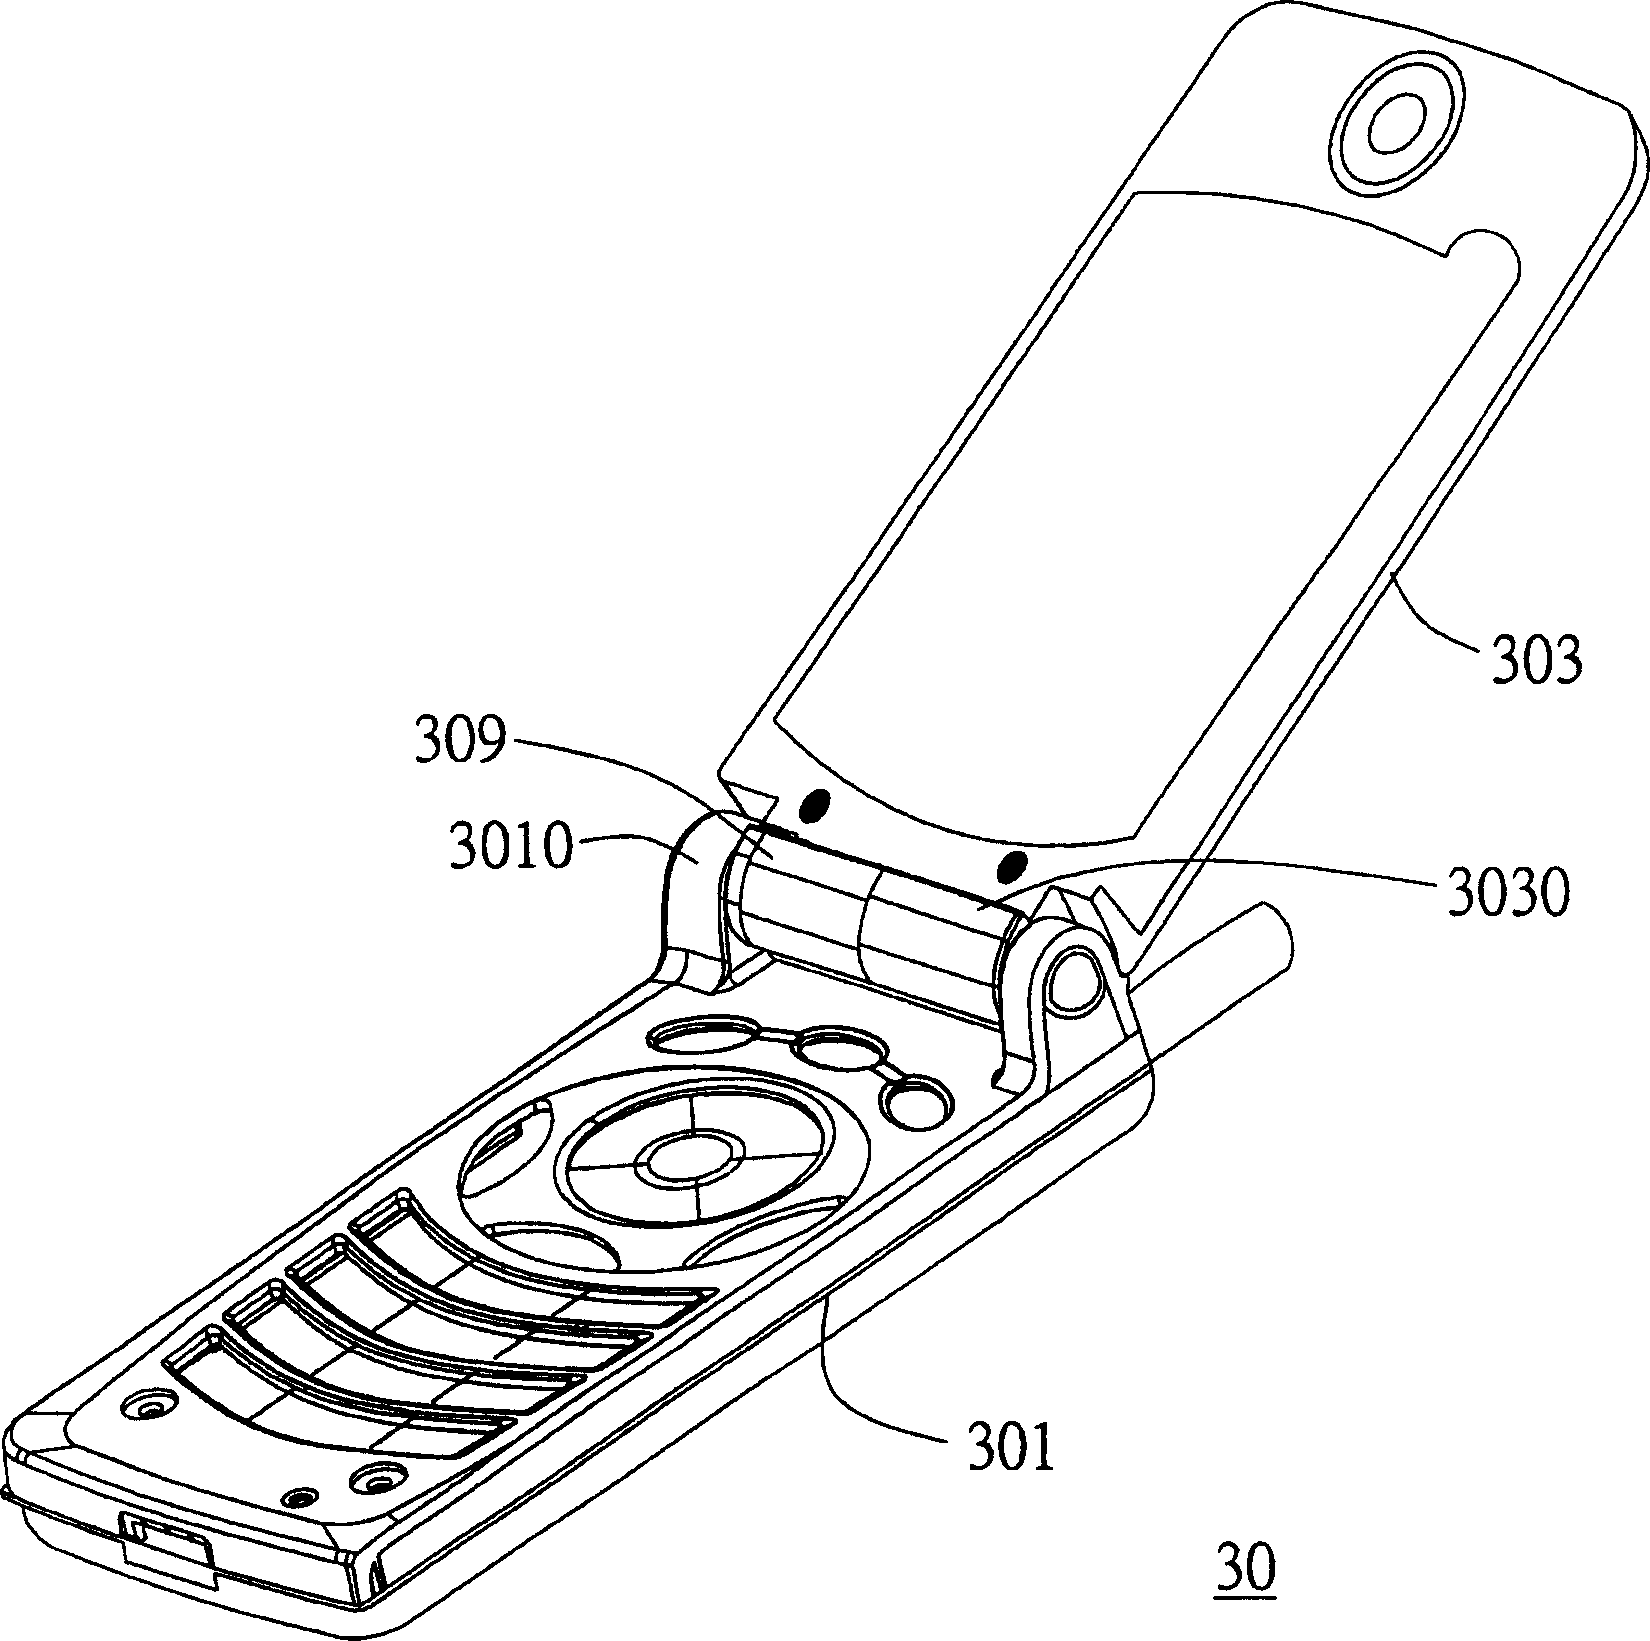 Folding mobile phone